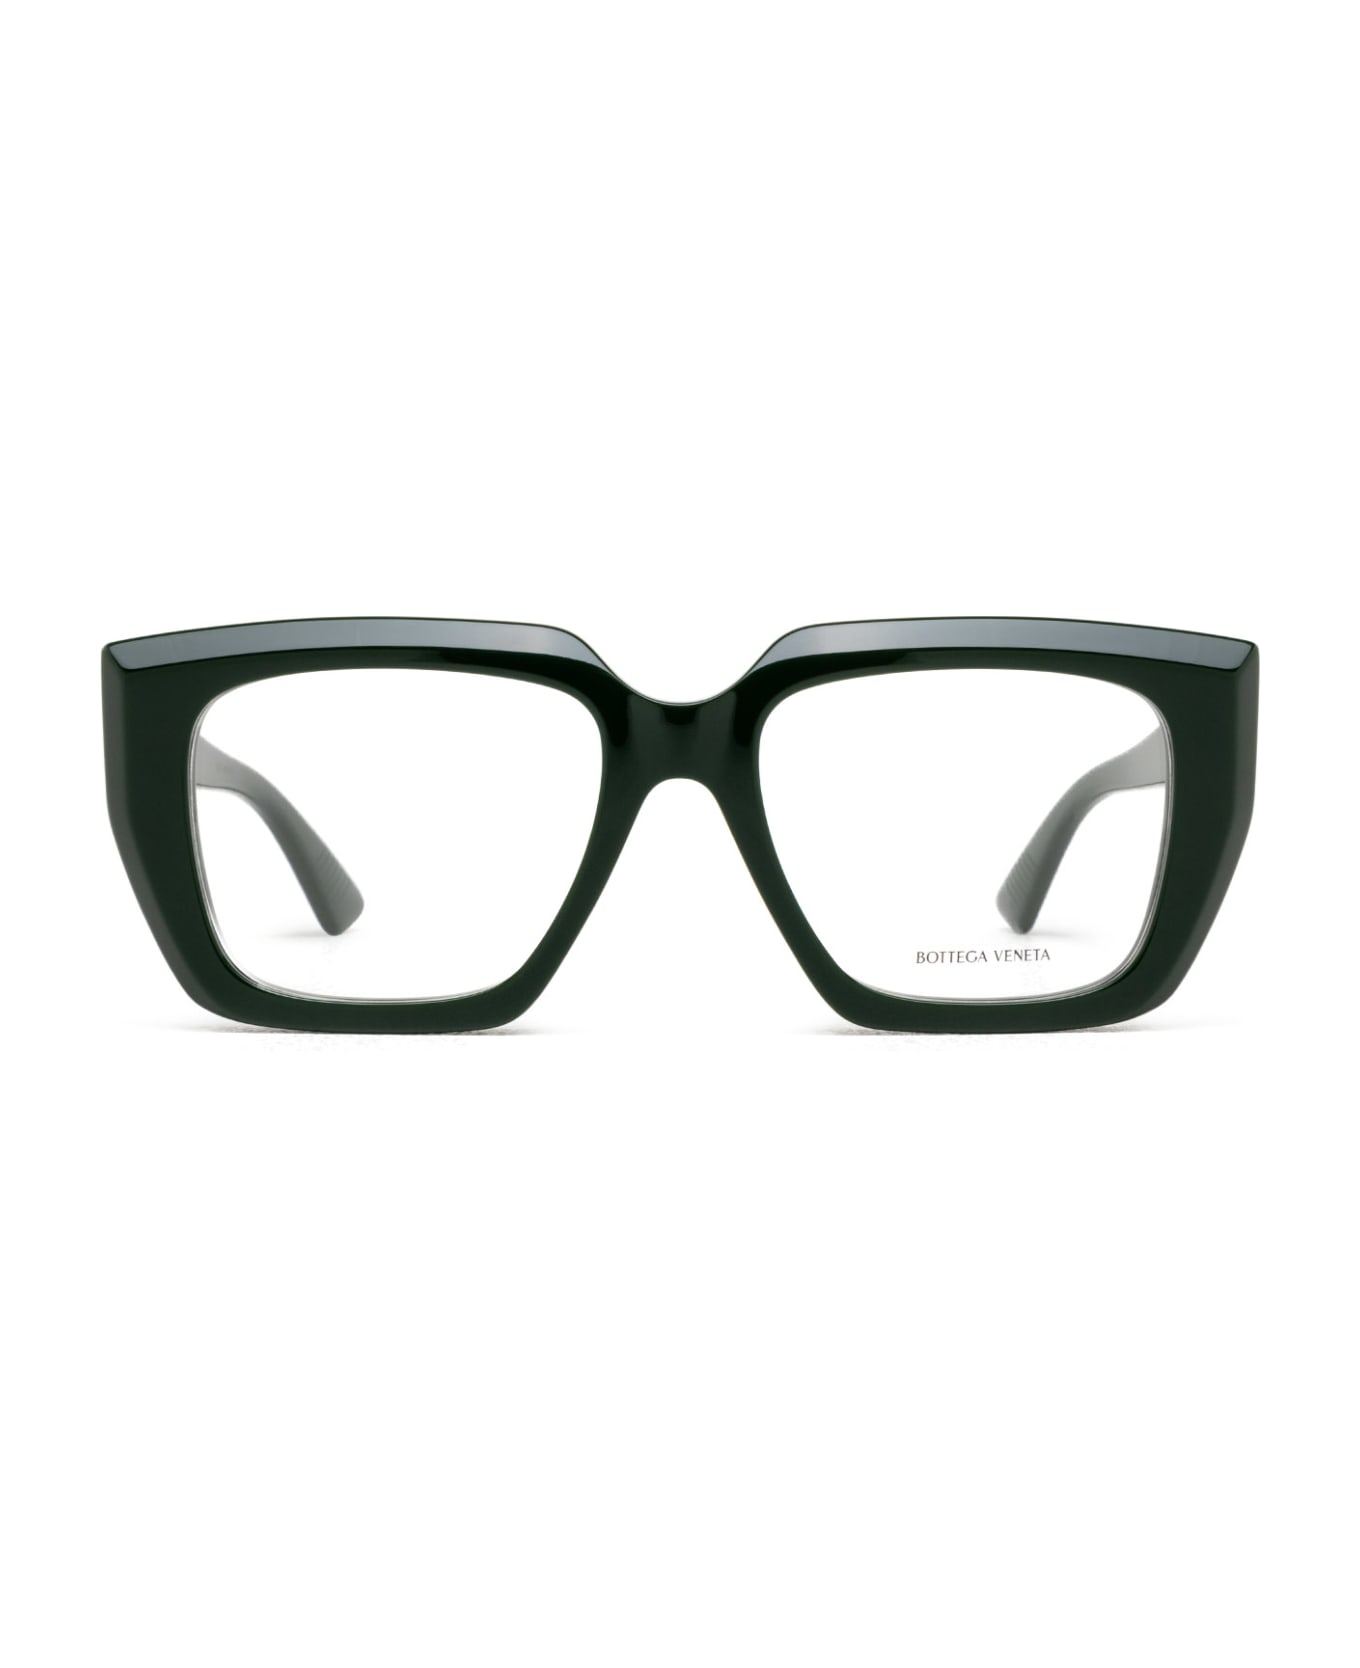 Bottega Veneta Eyewear Bv1032o Green Glasses - Green